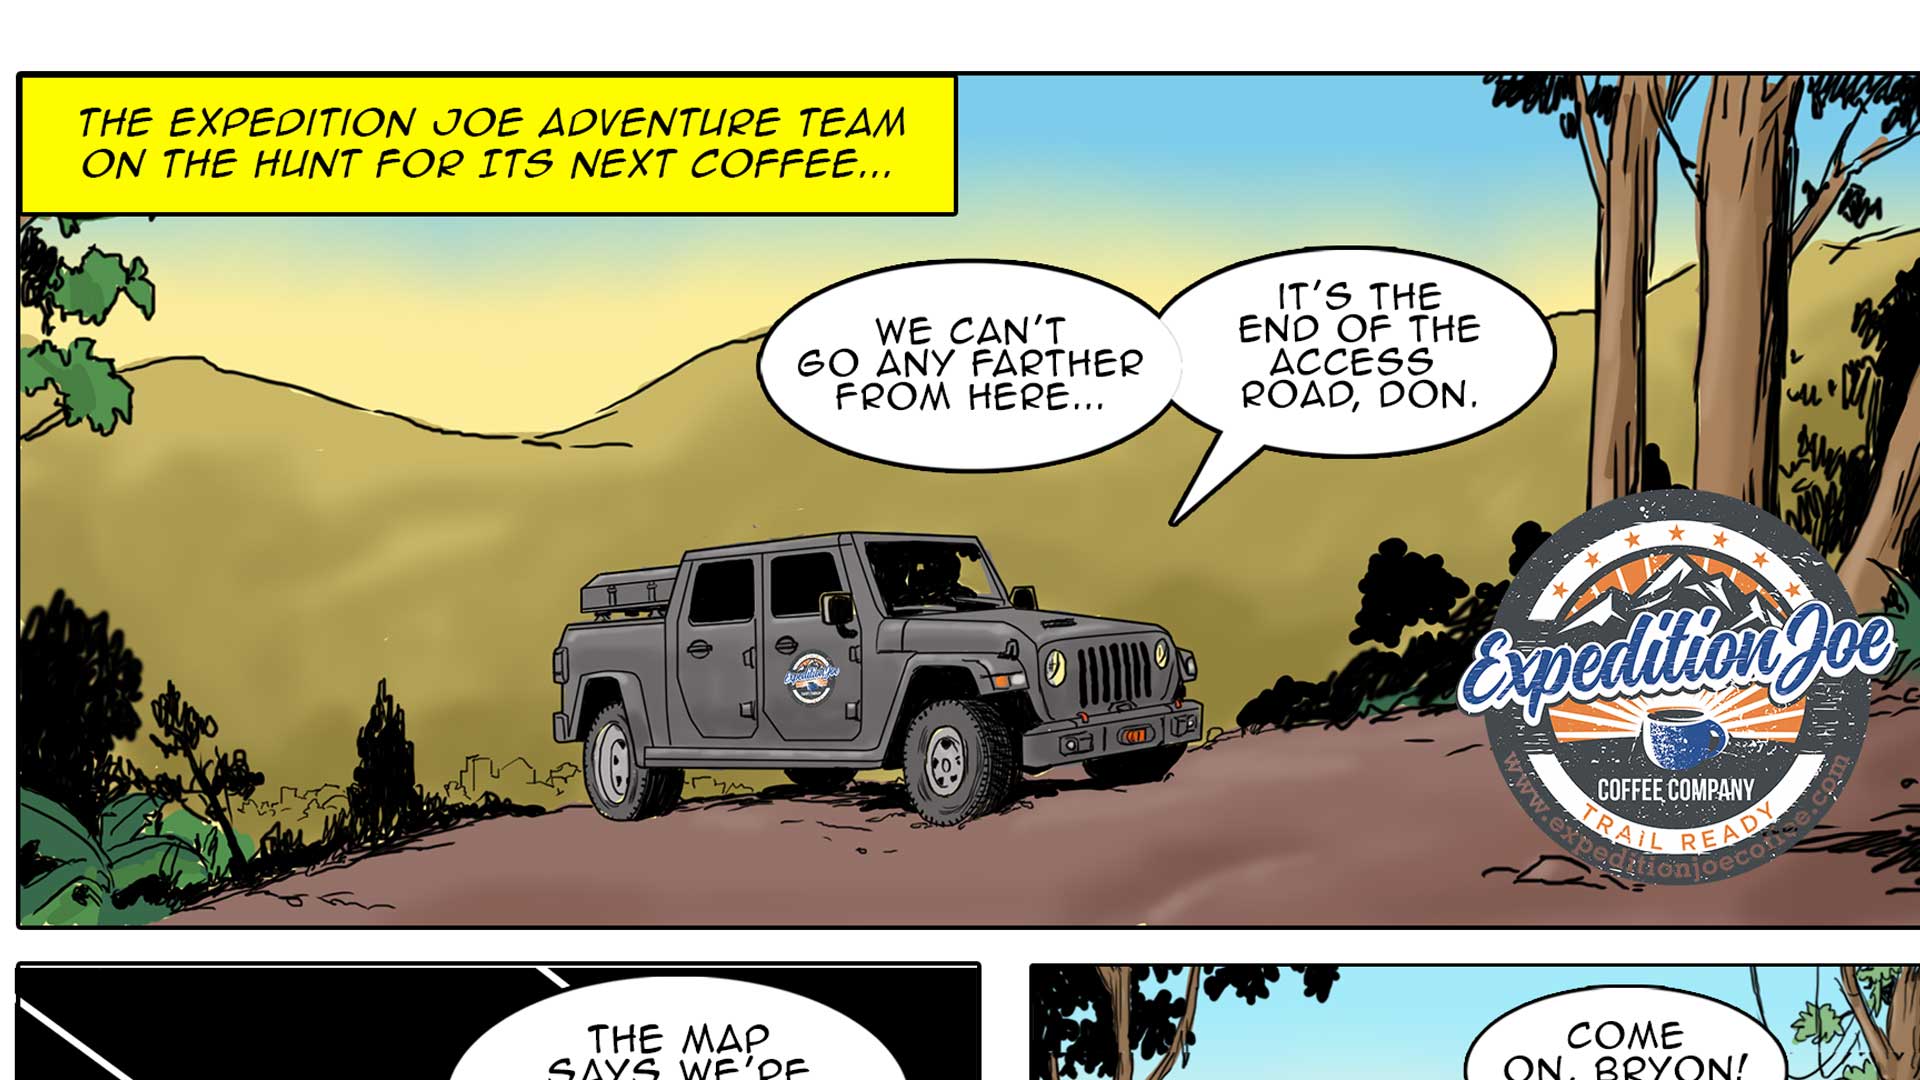 Expedition Joe Coffee Adventure Team locates a single origin Ethiopian Coffee